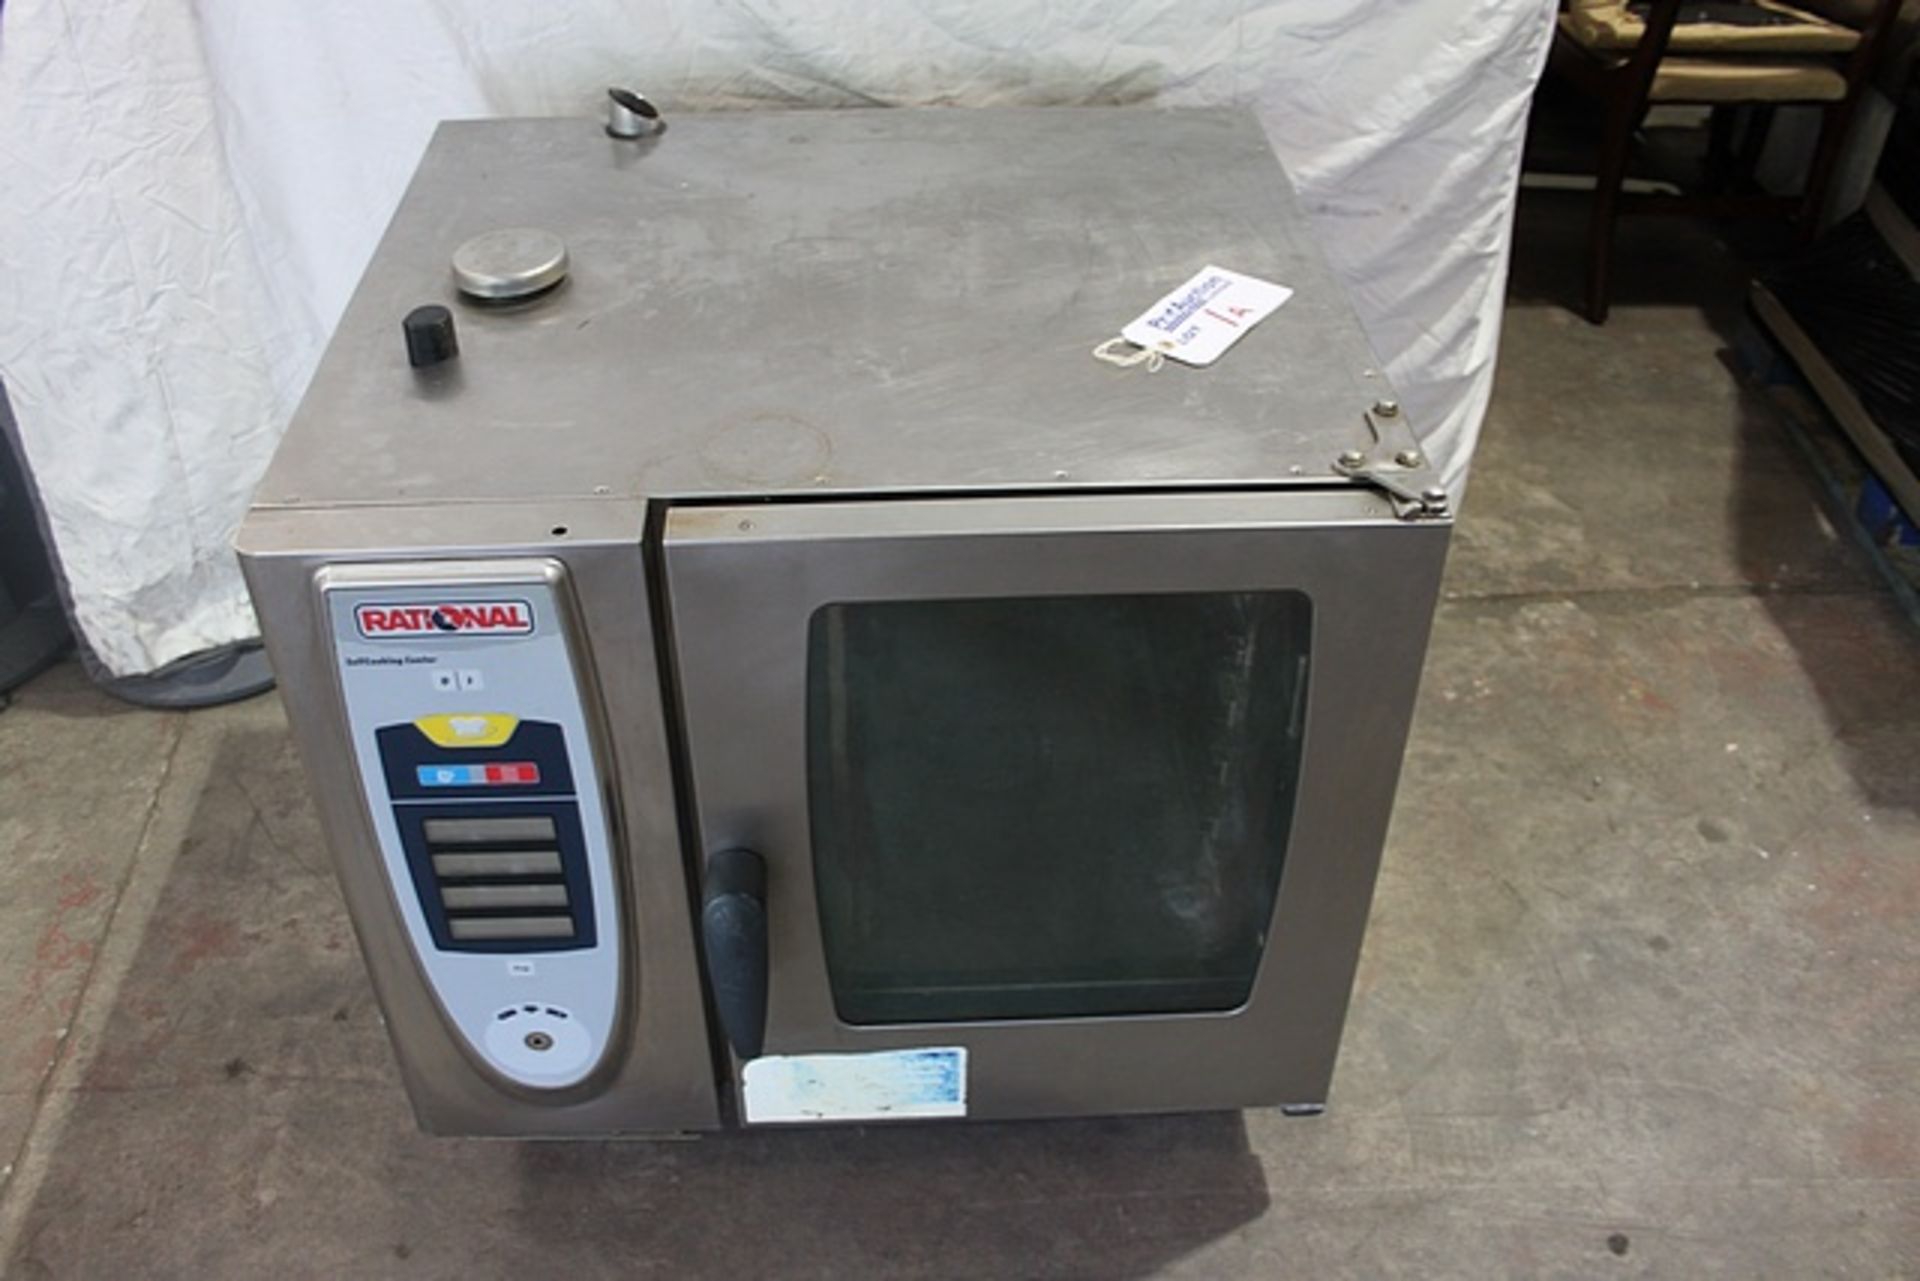 Rational model SCC61 6 grid electric combi oven